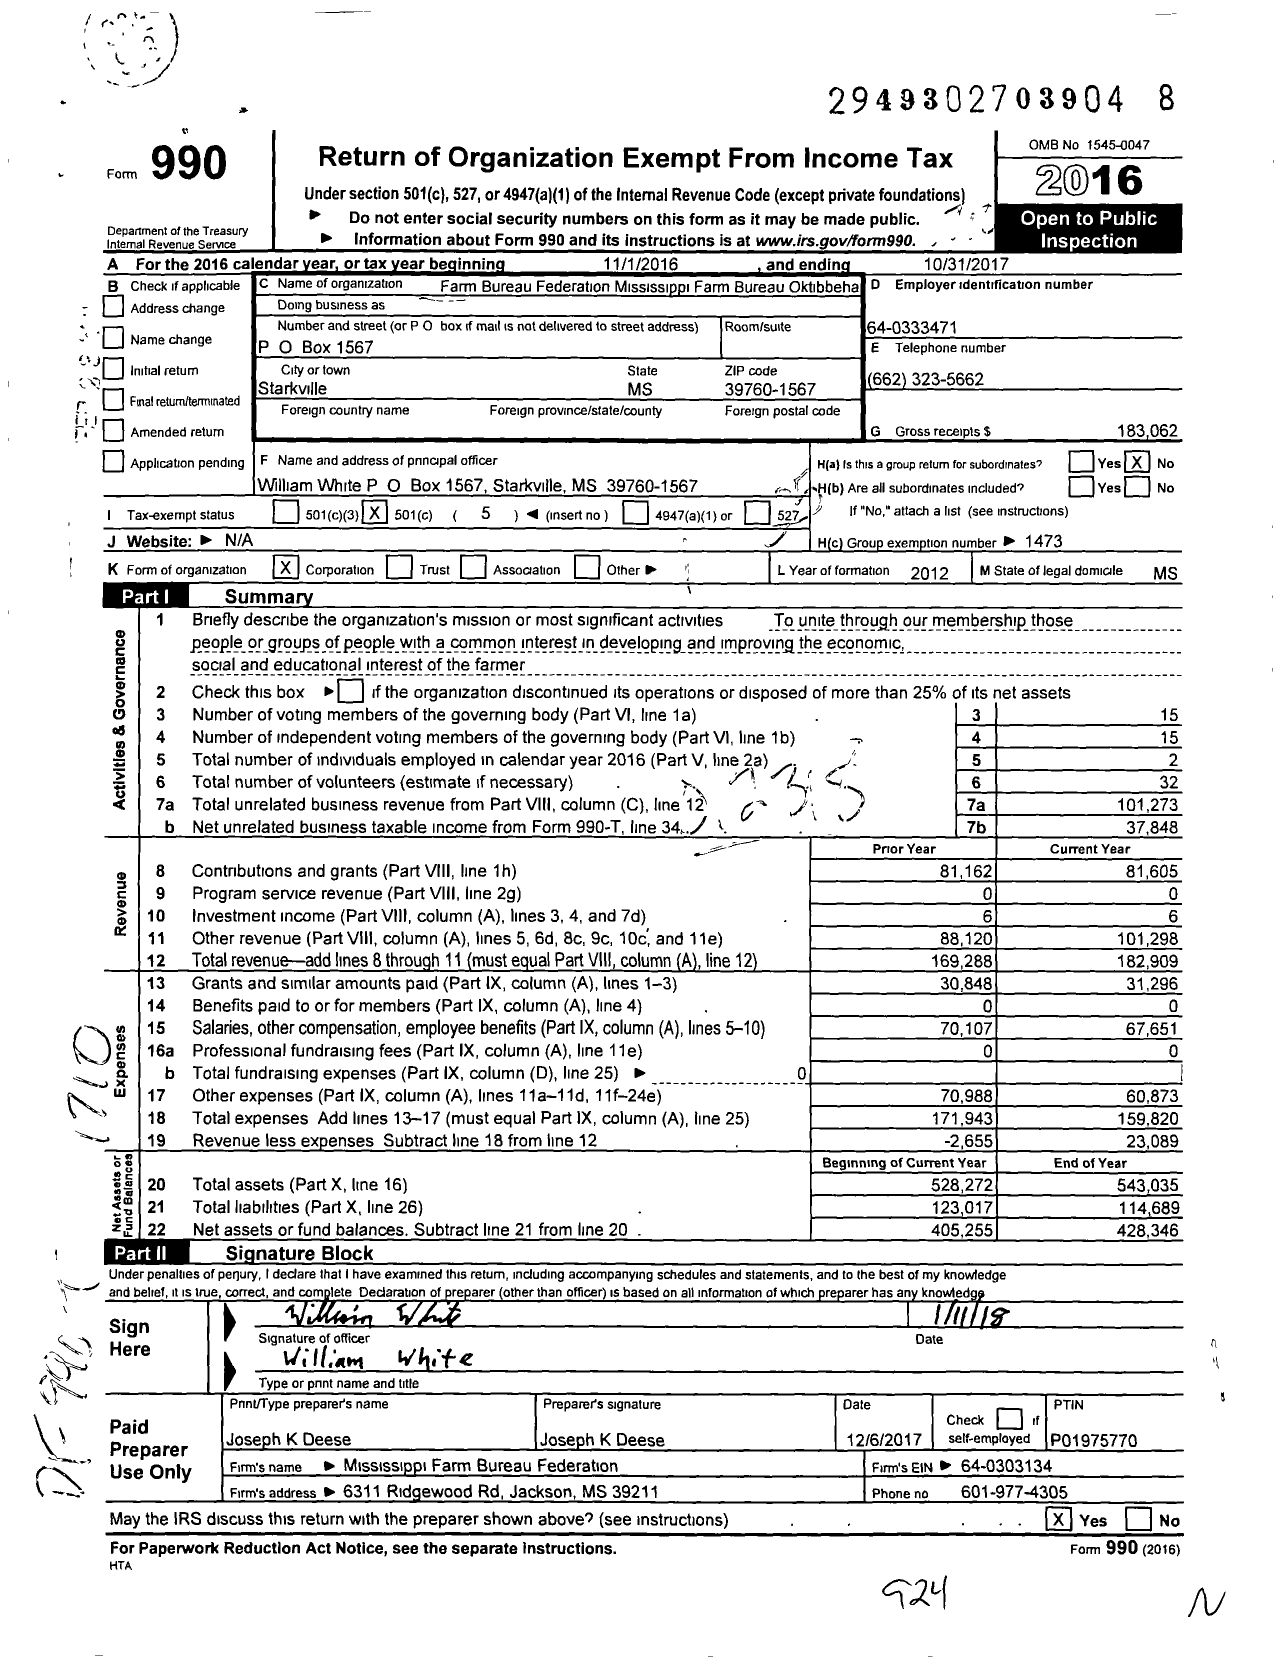 Image of first page of 2016 Form 990O for Mississippi Farm Bureau Federation - Farm Bureau Oktibbeha County